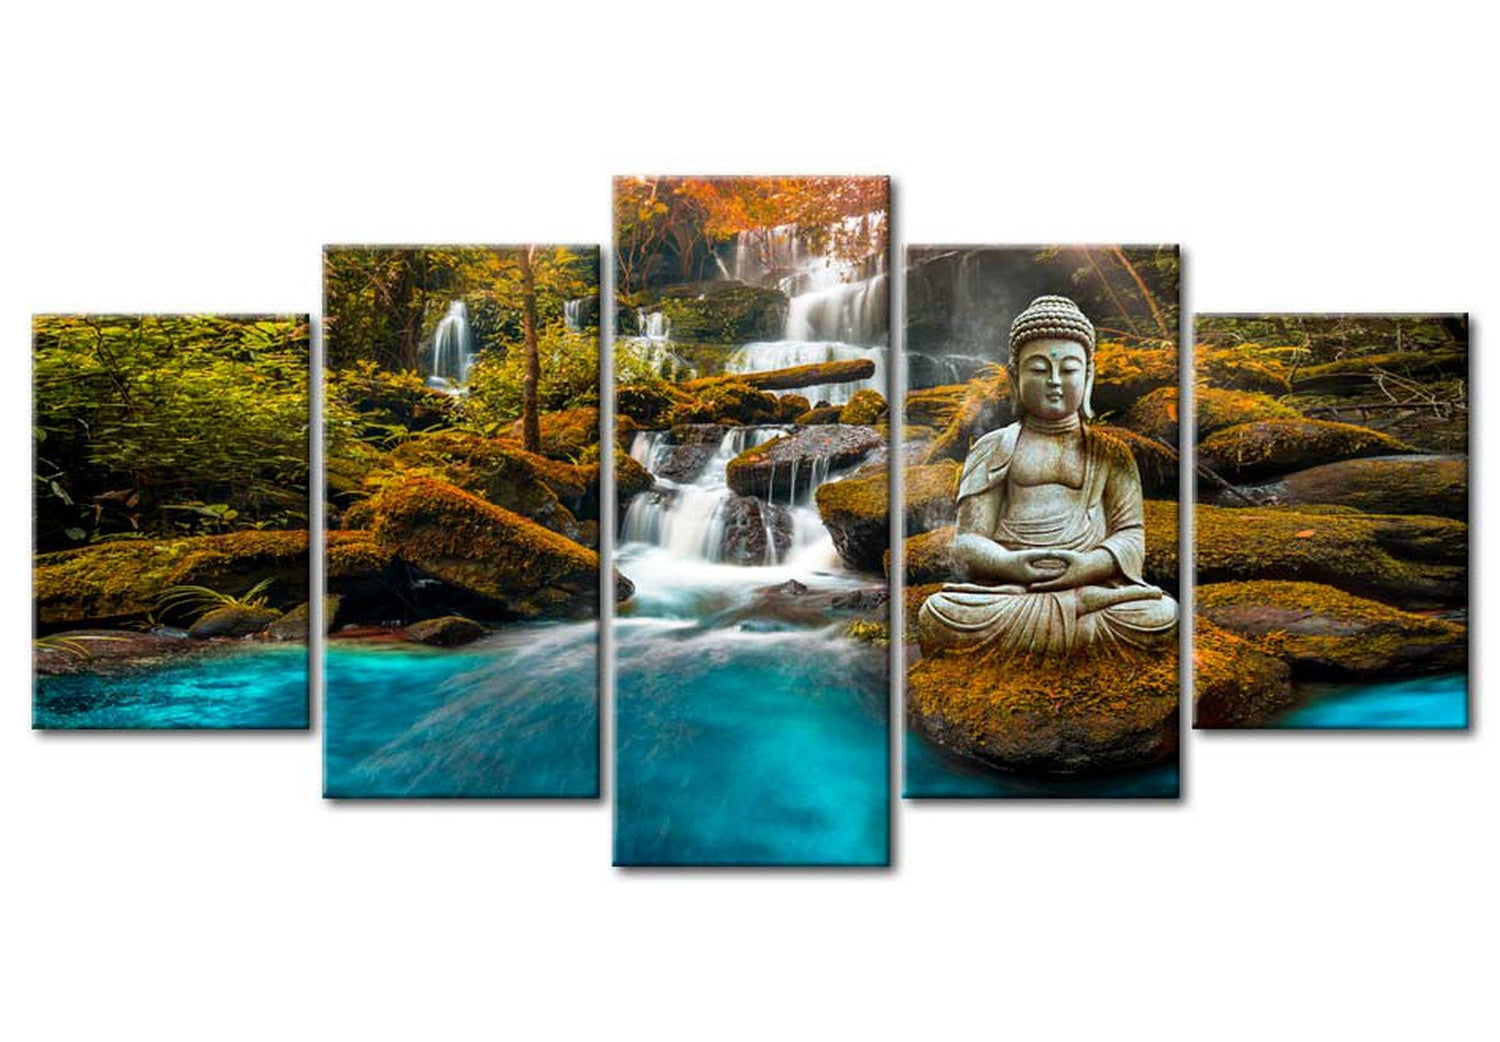 Spiritual Canvas Wall Art - Buddha Silence - 5 Pieces